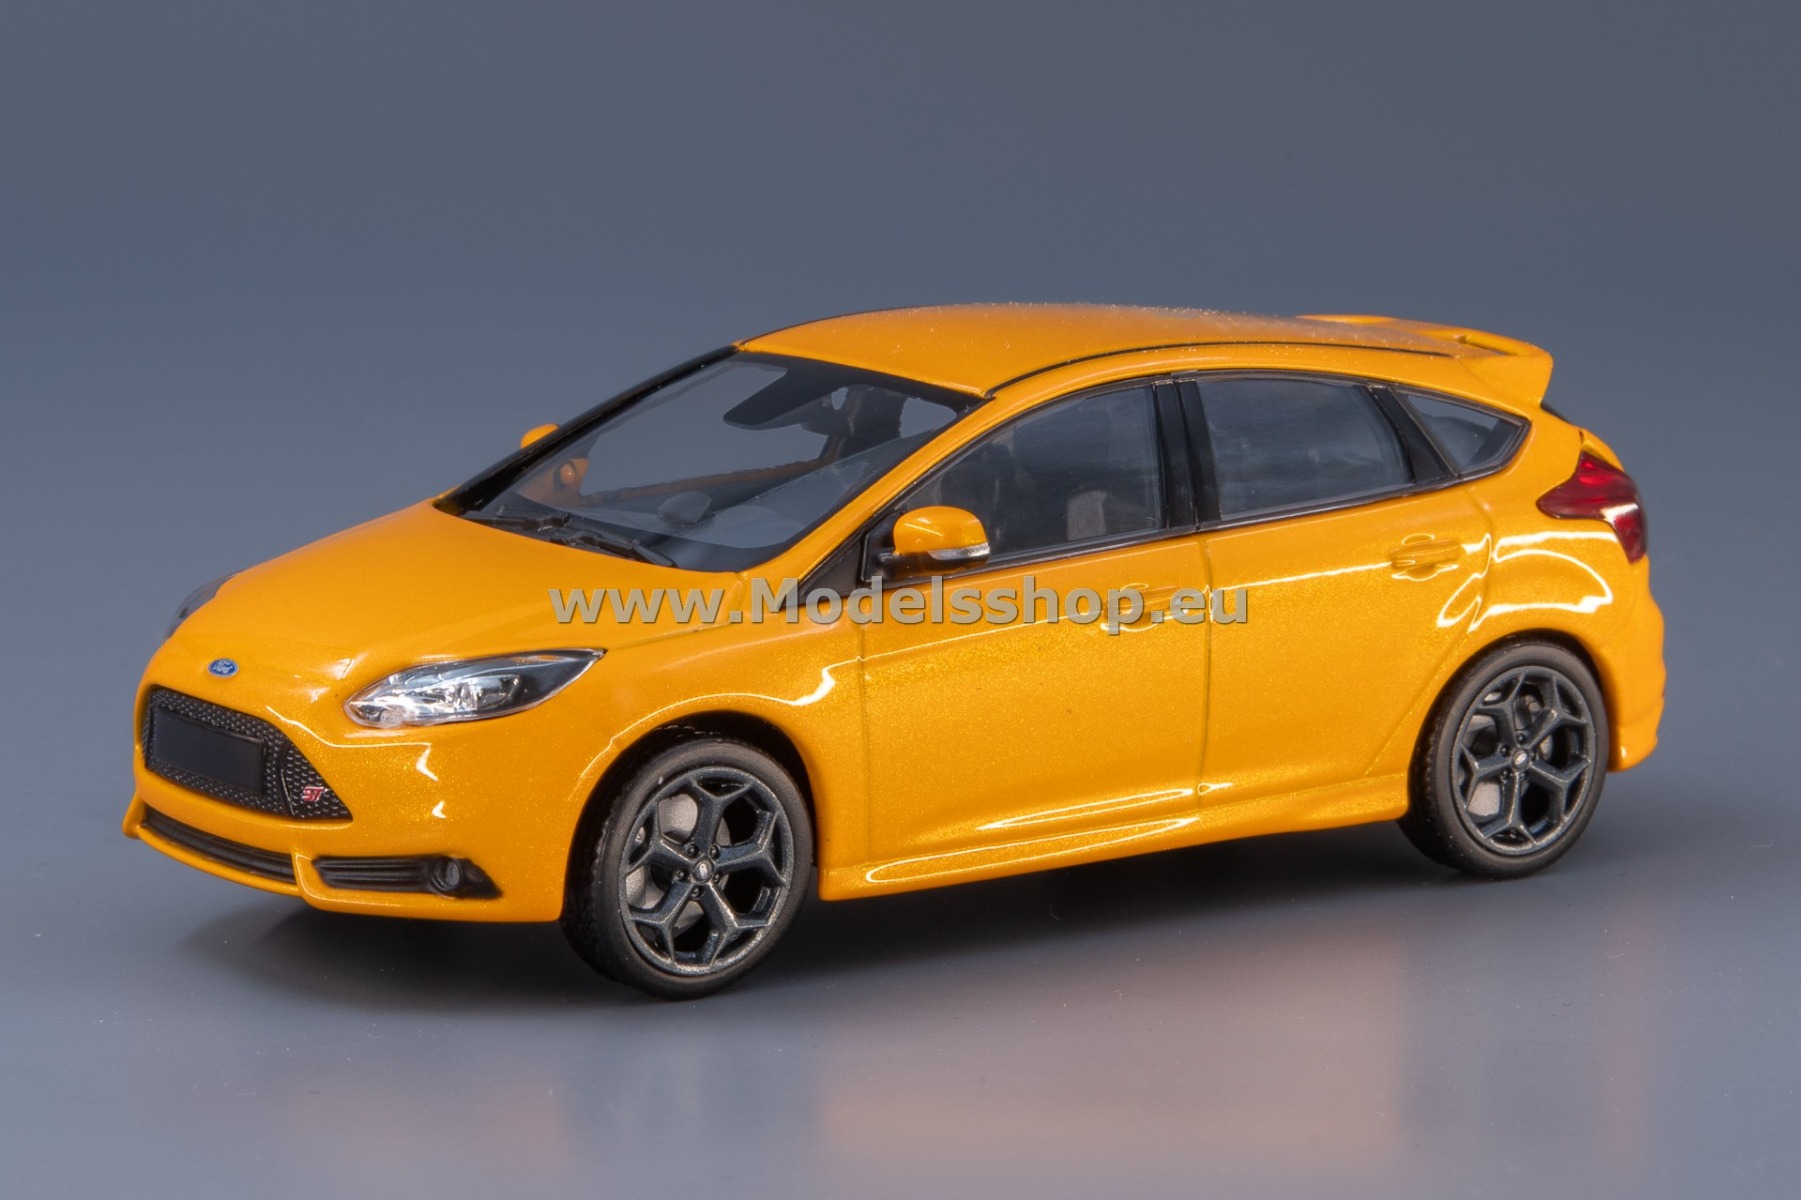 Maxichamps 940081901 Ford Focus ST, 2011 /orange metallic/